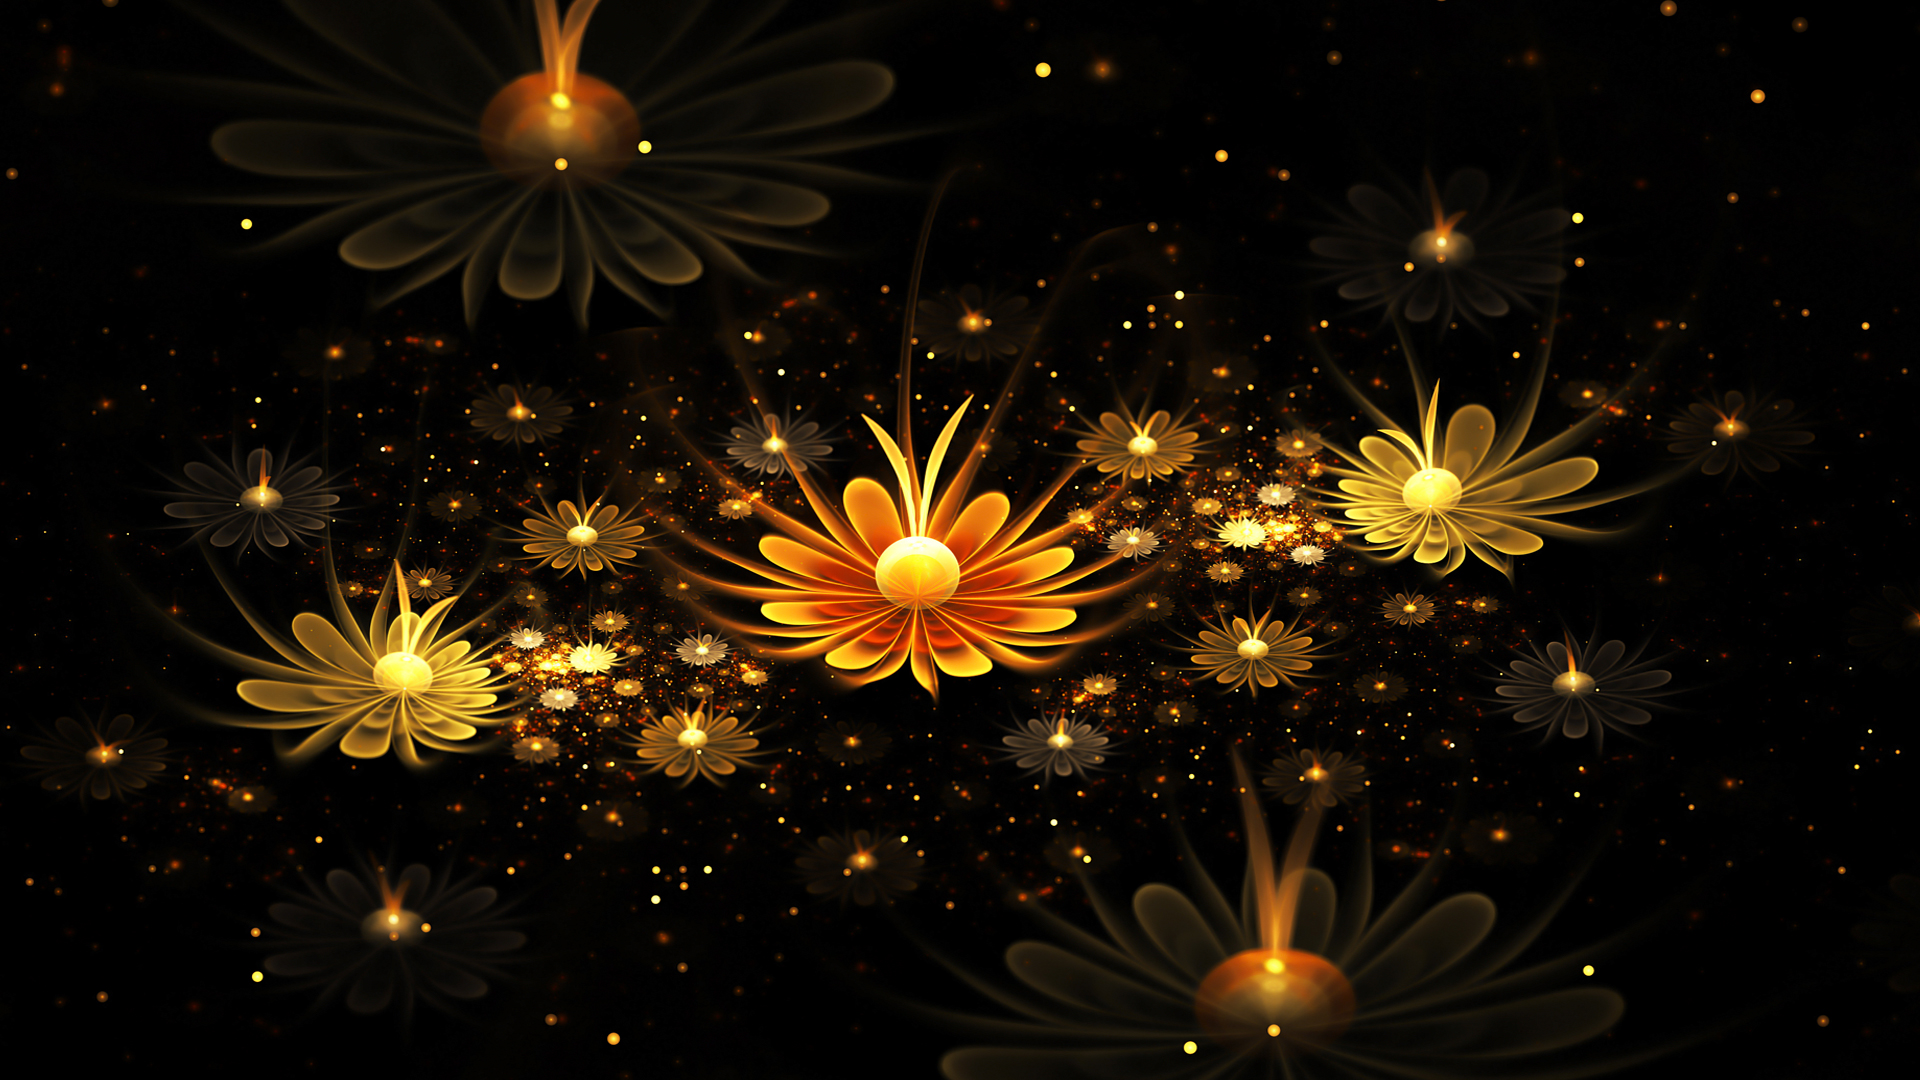 Flowers hd Wallpapers For Desktop 3d 3d Flowers hd Wallpapers